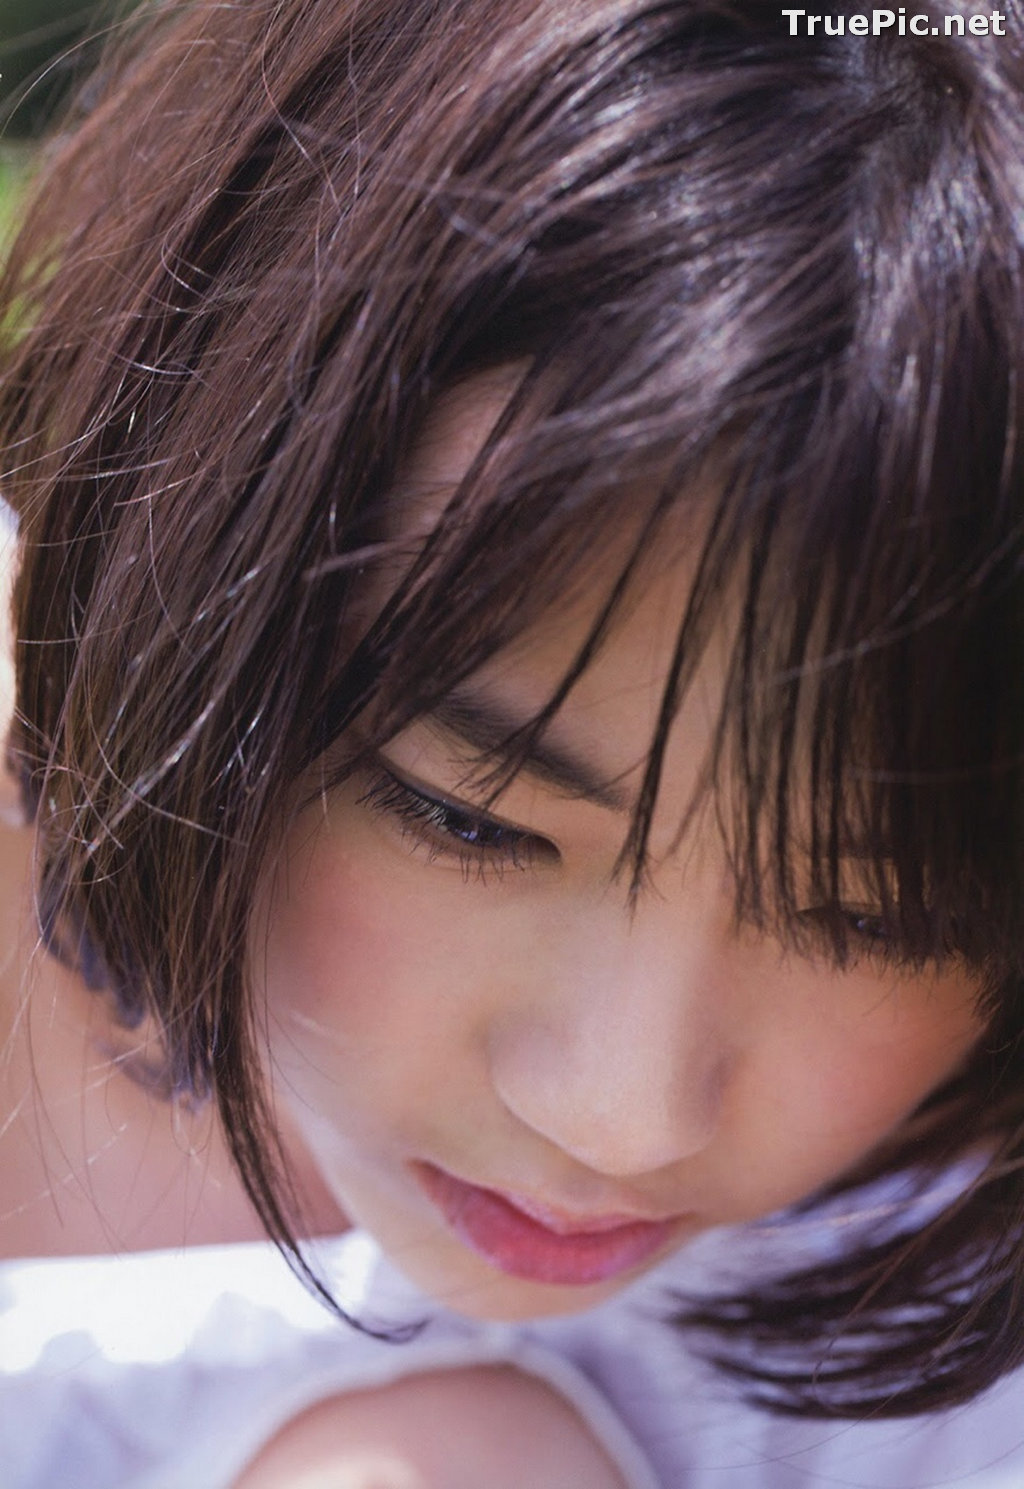 Image Japanese Singer and Actress - Sakura Miyawaki (宮脇咲良) - Sexy Picture Collection 2021 - TruePic.net - Picture-78